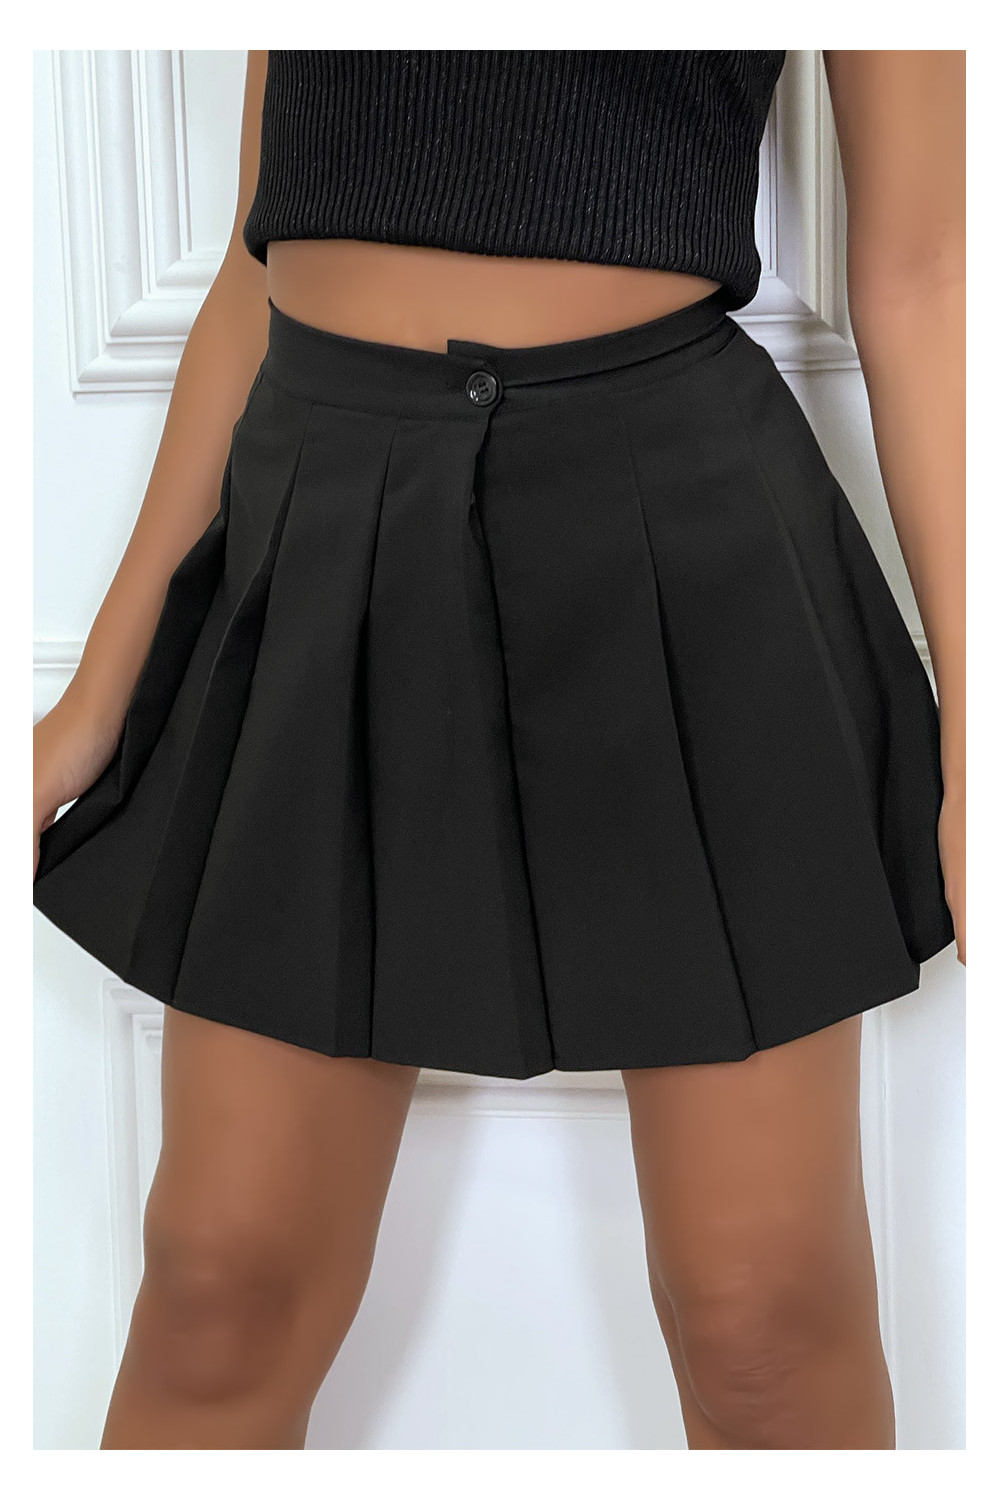 veredicto esta Isaac Moda Mujer - Minifalda Plisada Negra Talla S, M, L